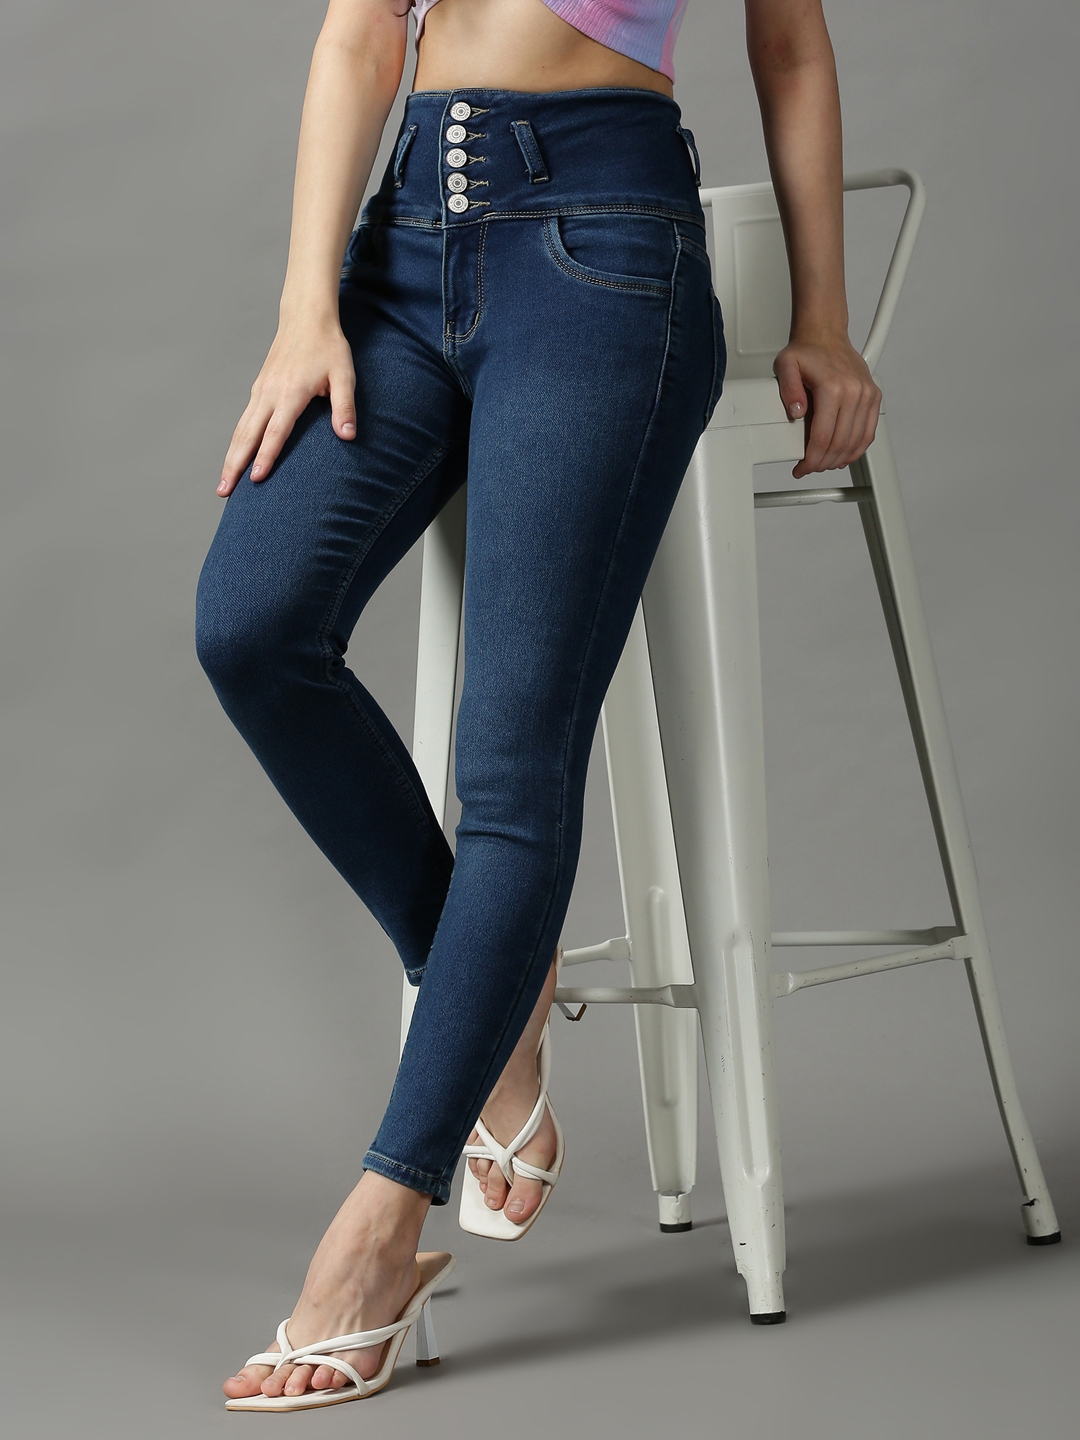 SHOWOFF Women's Clean Look Skinny Fit Navy Blue Denim Jeans